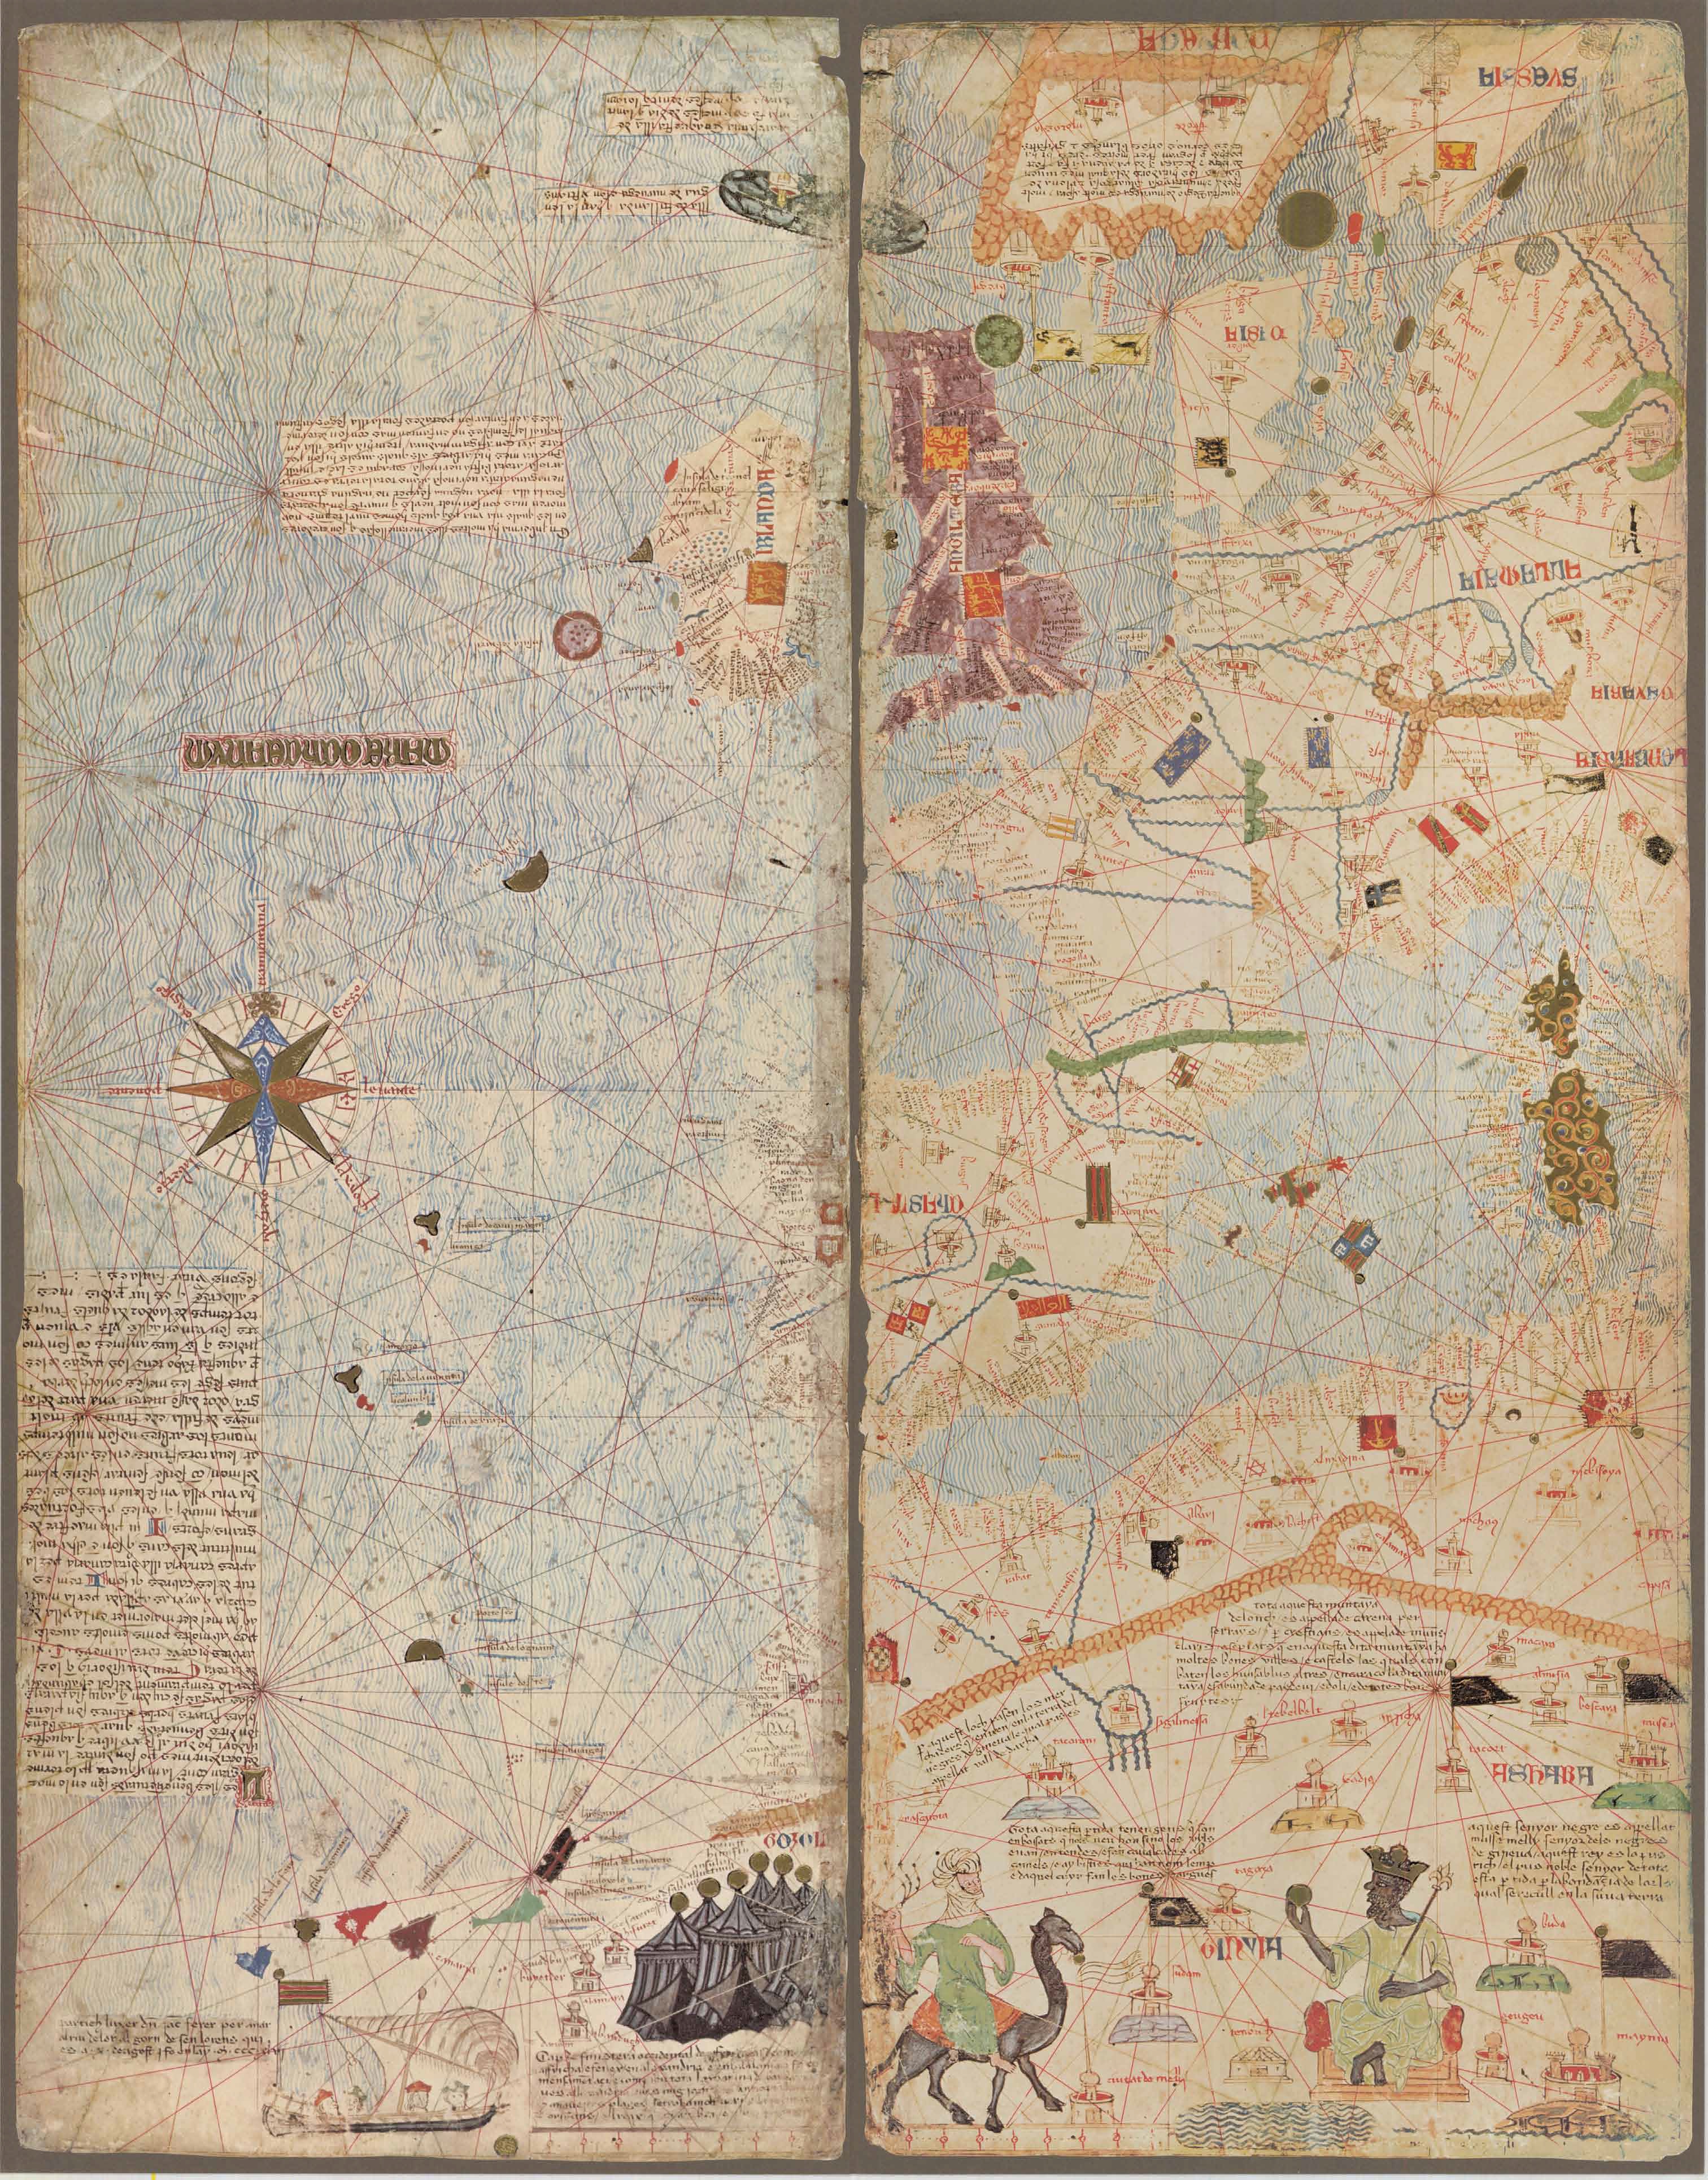 Fig. 1 [Extracto] Abraham Cresques y Jafuda Cresques, Mapamundi: the Catalan Atlas, 1375